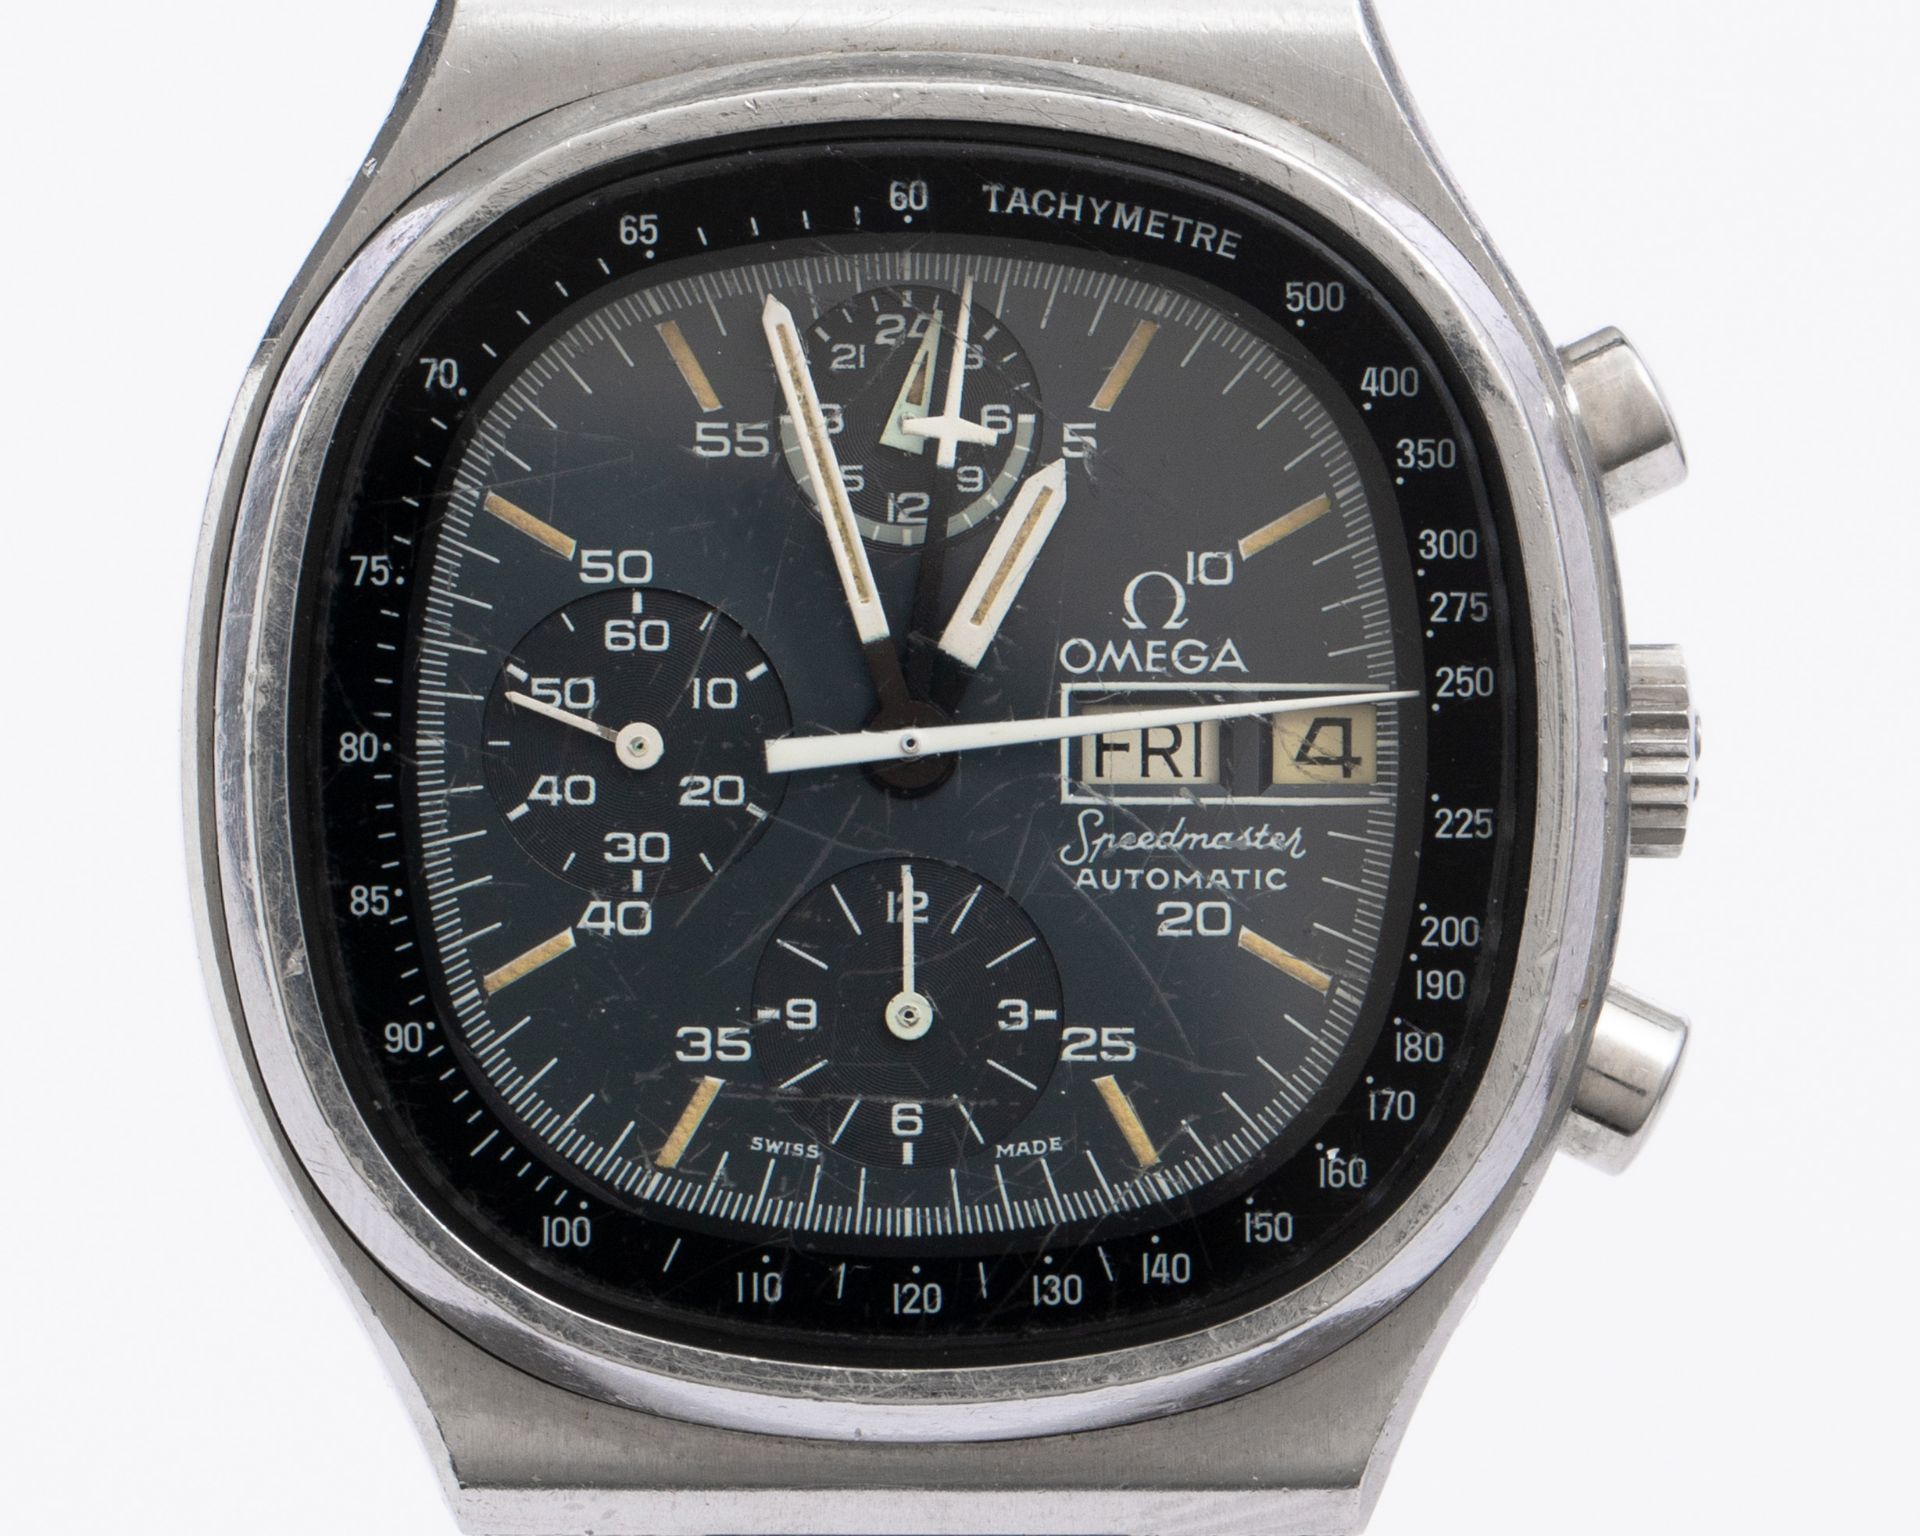 OMEGA Speedmaster Mark IV TV Chronograph wristwatch, Reference 176.0014, 1970s